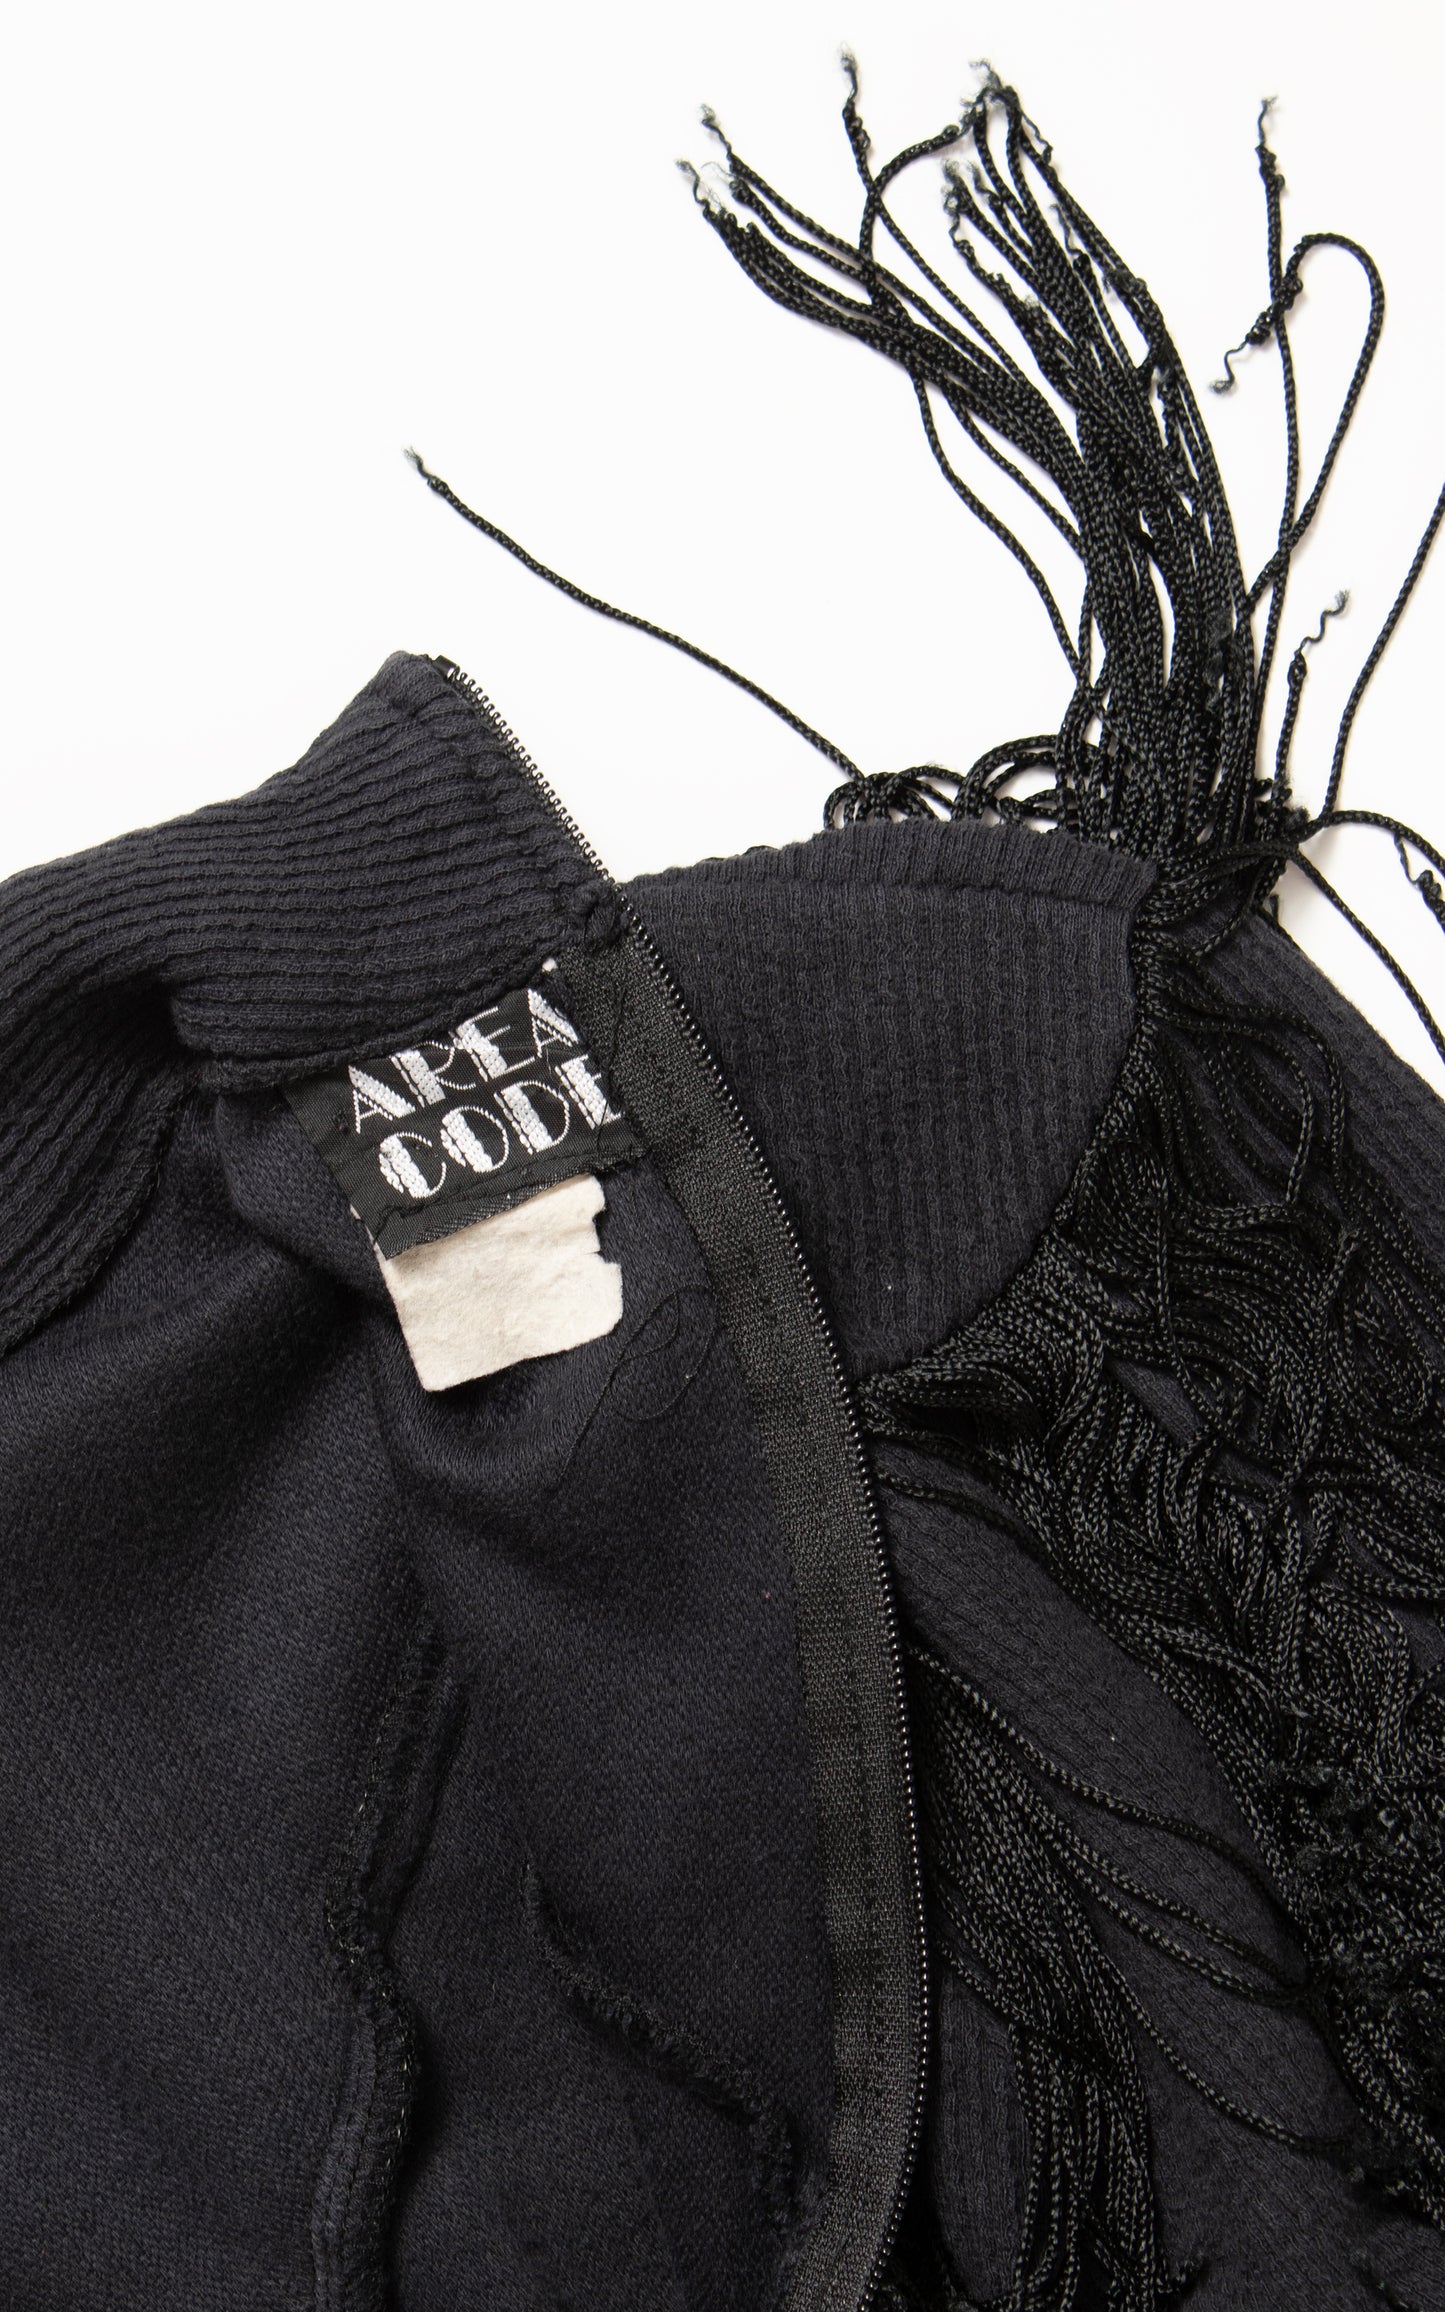 1990s Fringe Black Jersey Wiggle Dress | x-small/small/medium